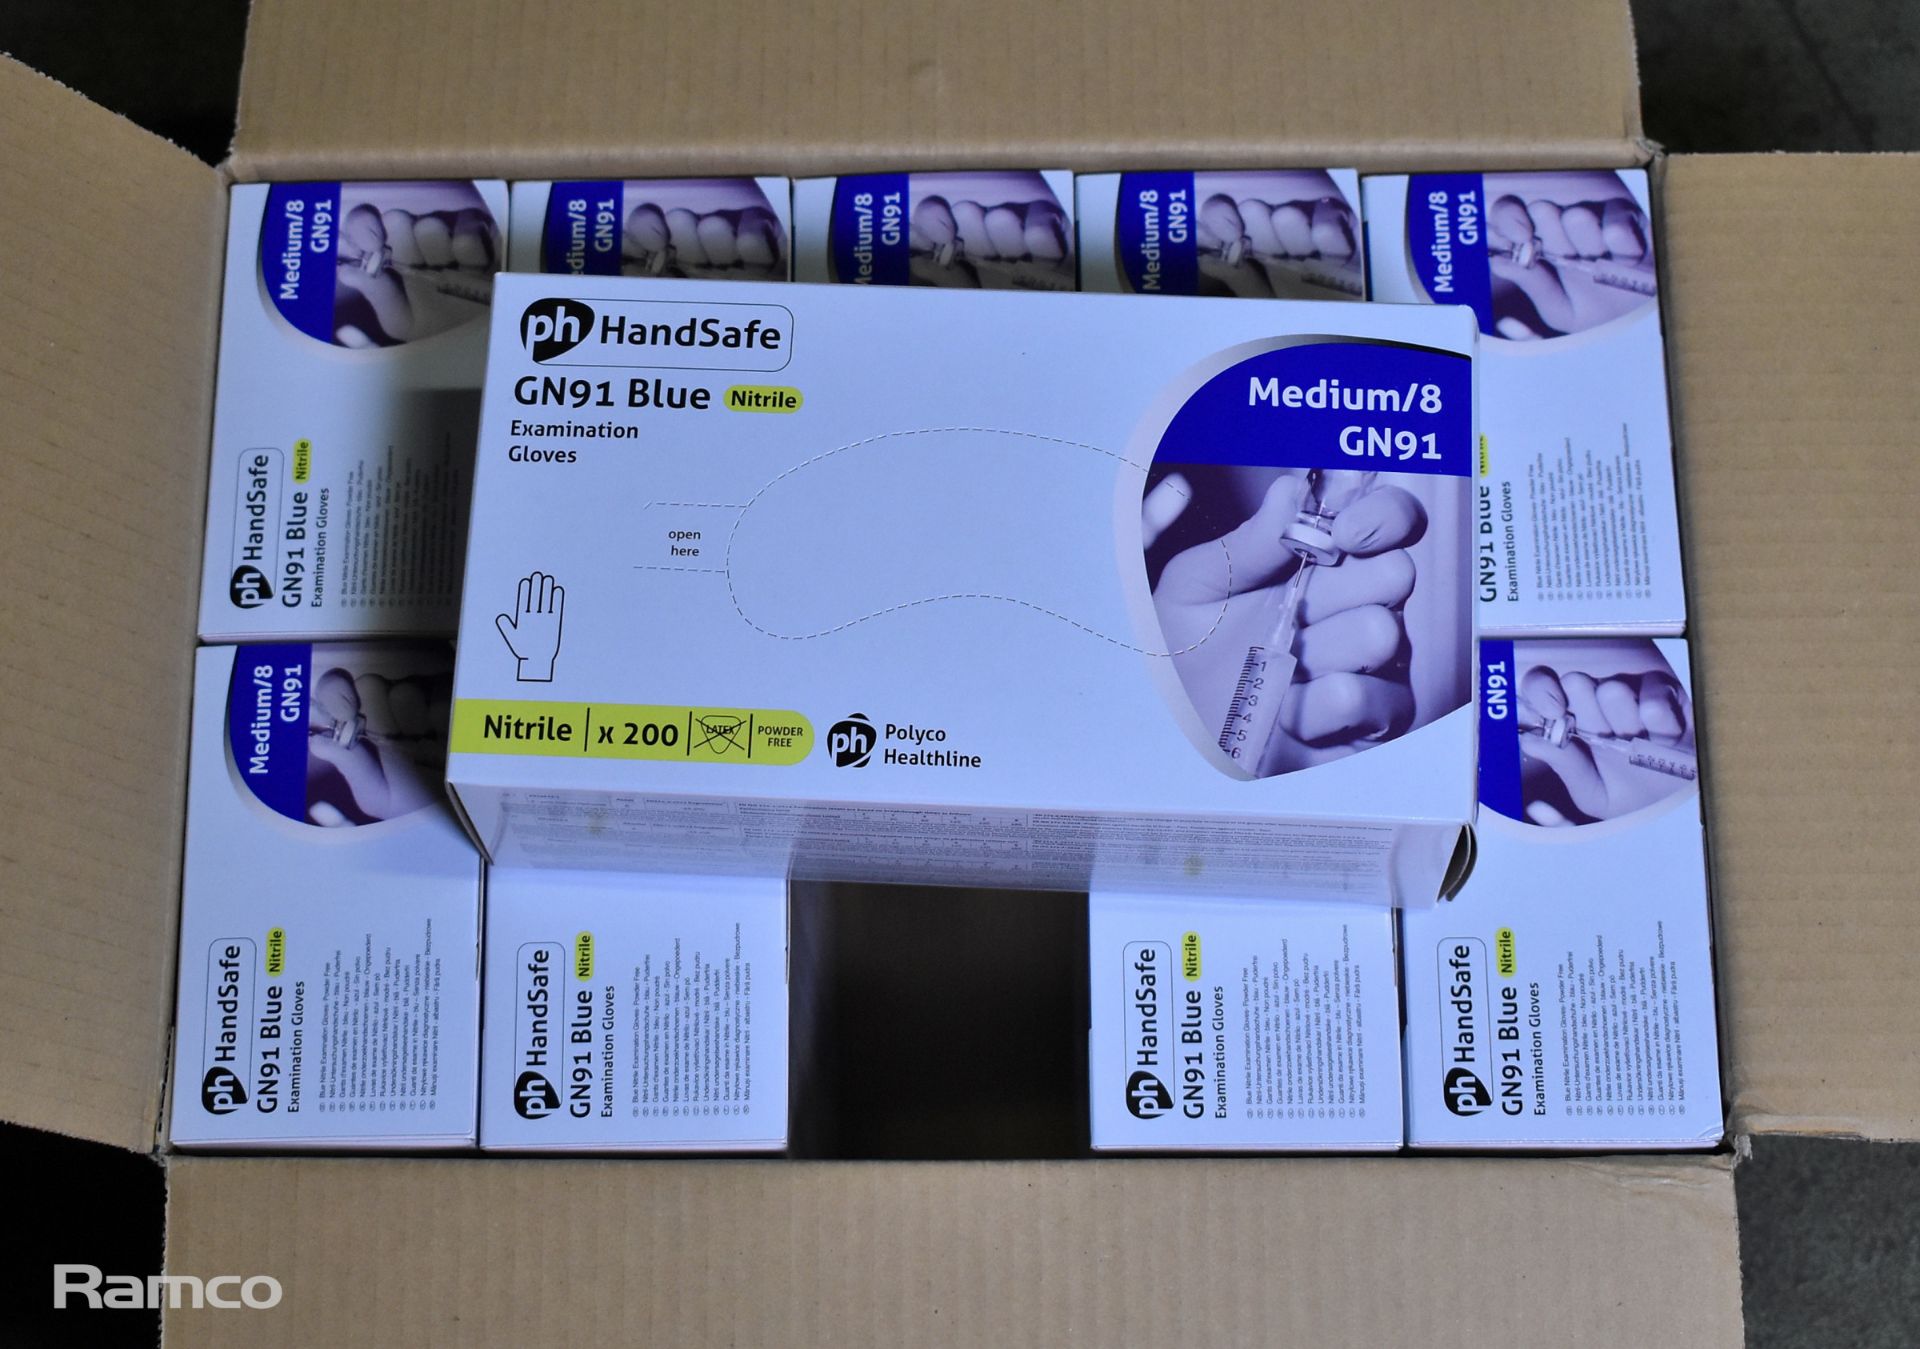 HandSafe GN91 powder free blue nitrile exam gloves - medium - 10 packs per case - Image 2 of 3